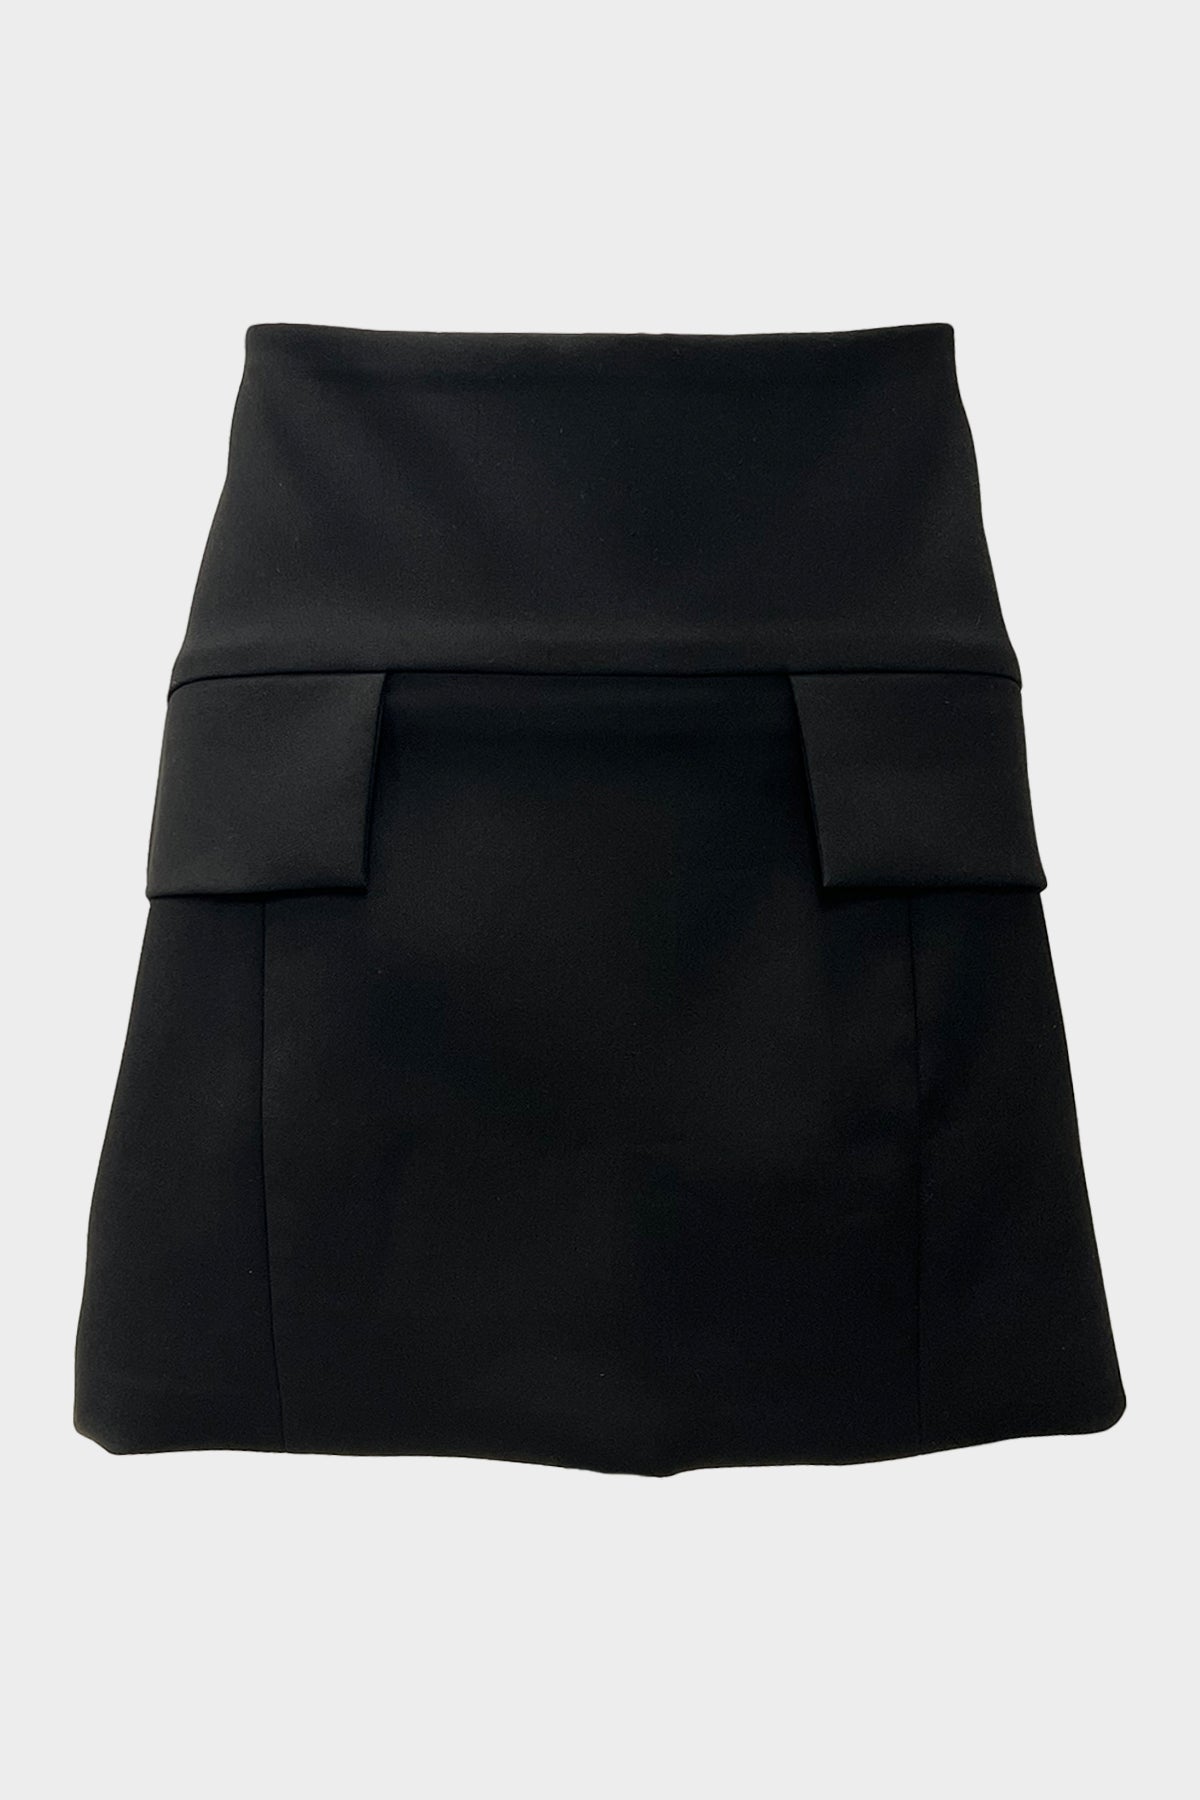 Marie Mini Skirt in Black - shop-olivia.com